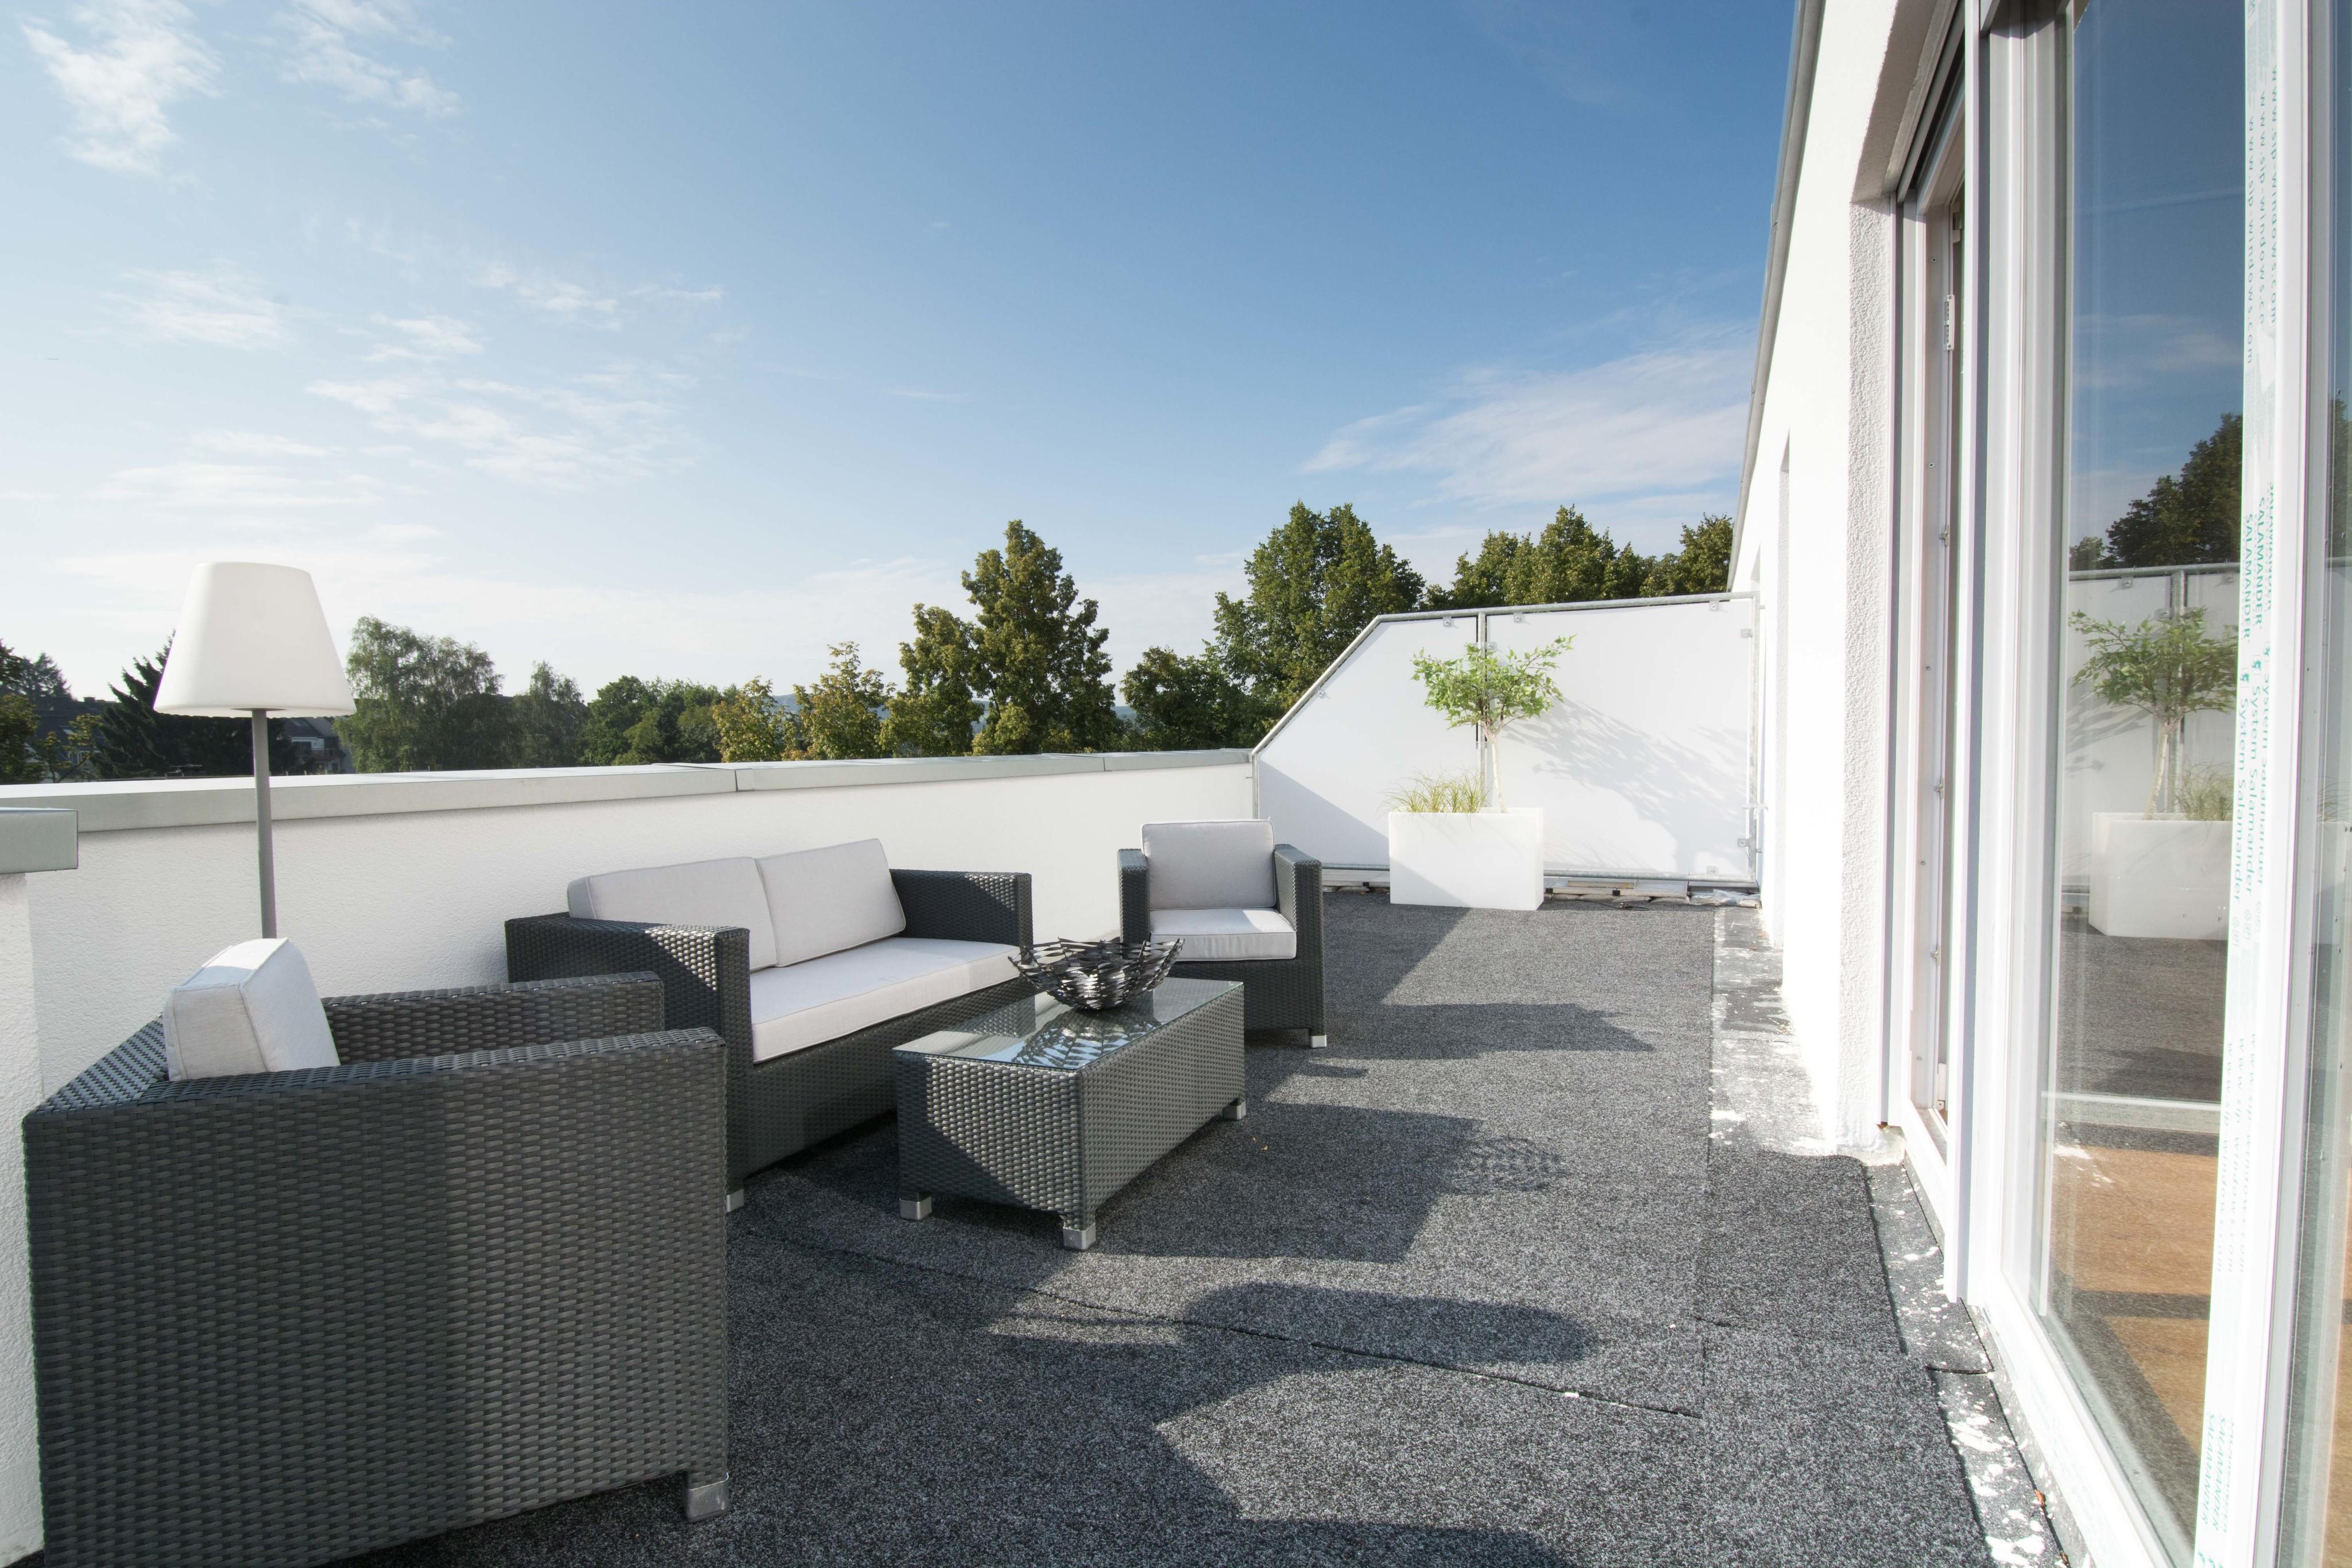 Terrasse Lounge #terrasse #gartenmöbel #balkonmöbel #korbtisch ©www.Lunahomestaging.de